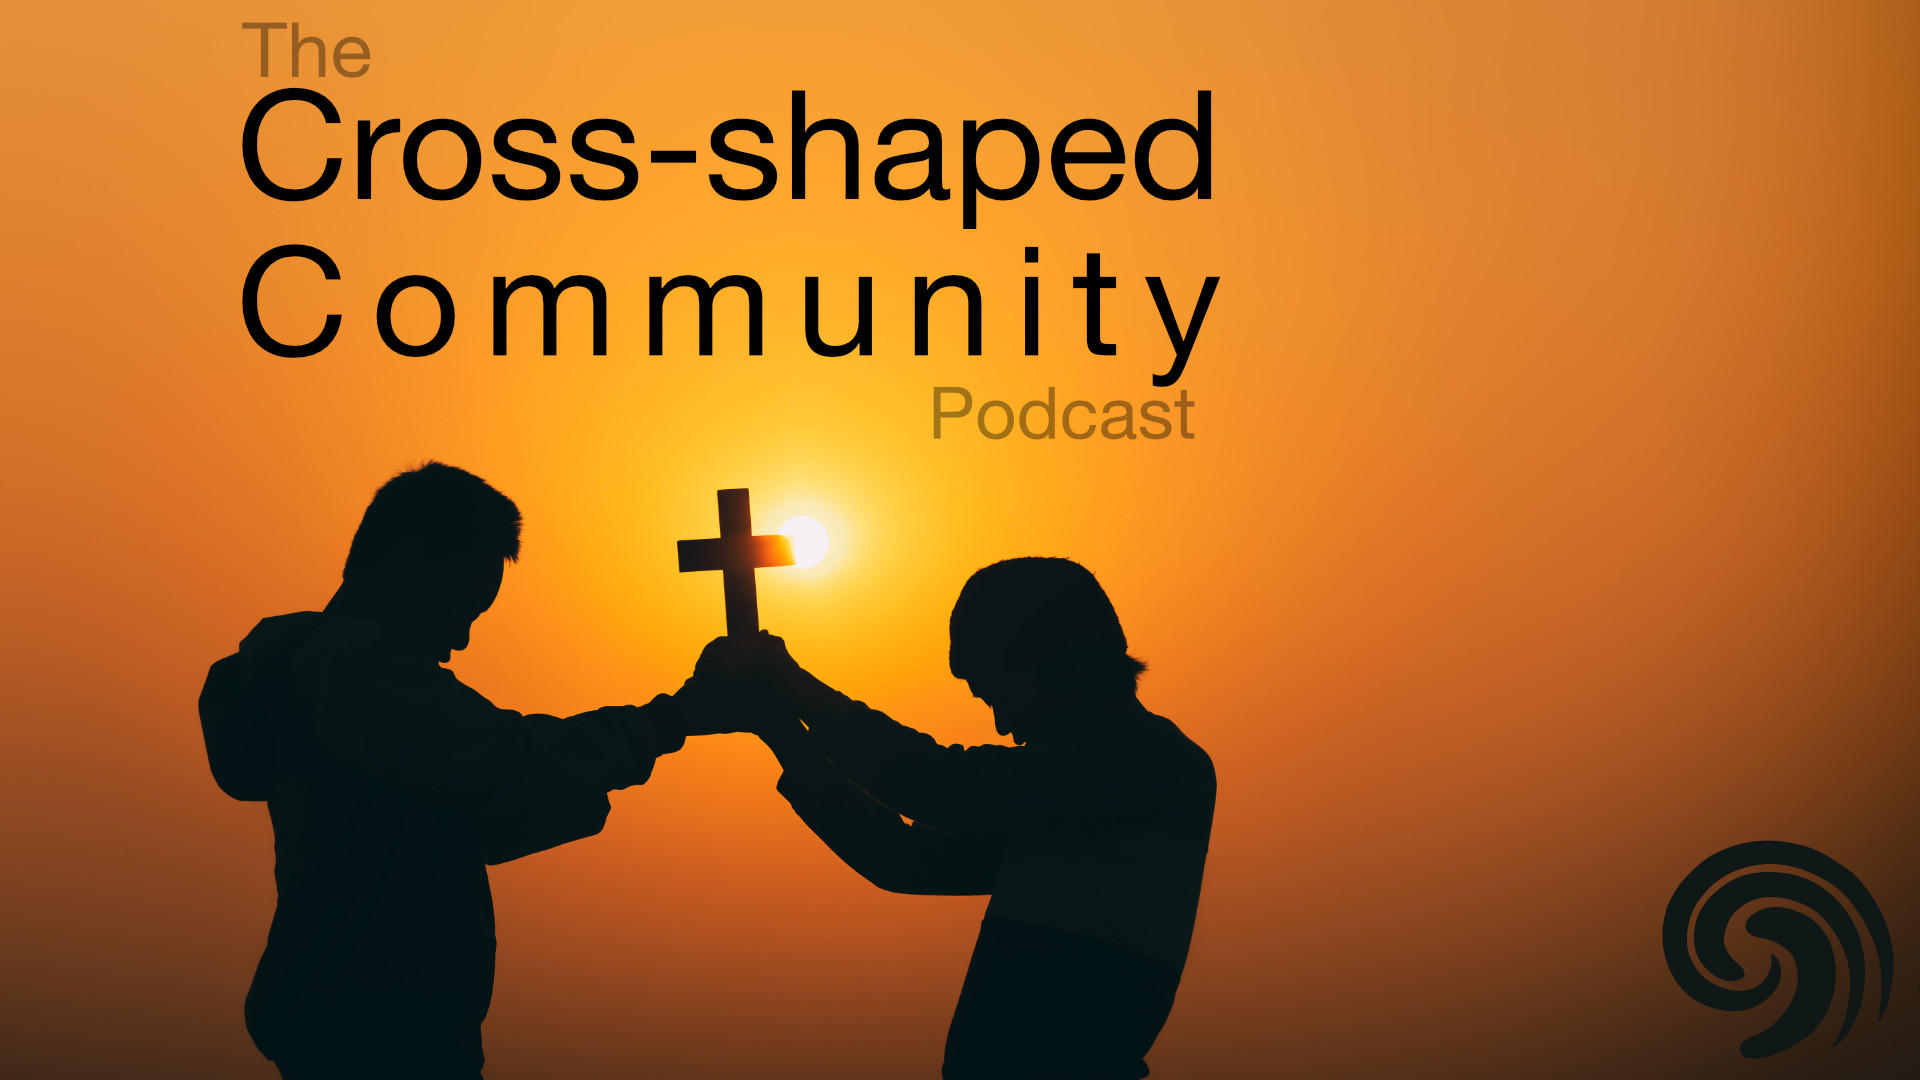 Cross-shaped community role models Image